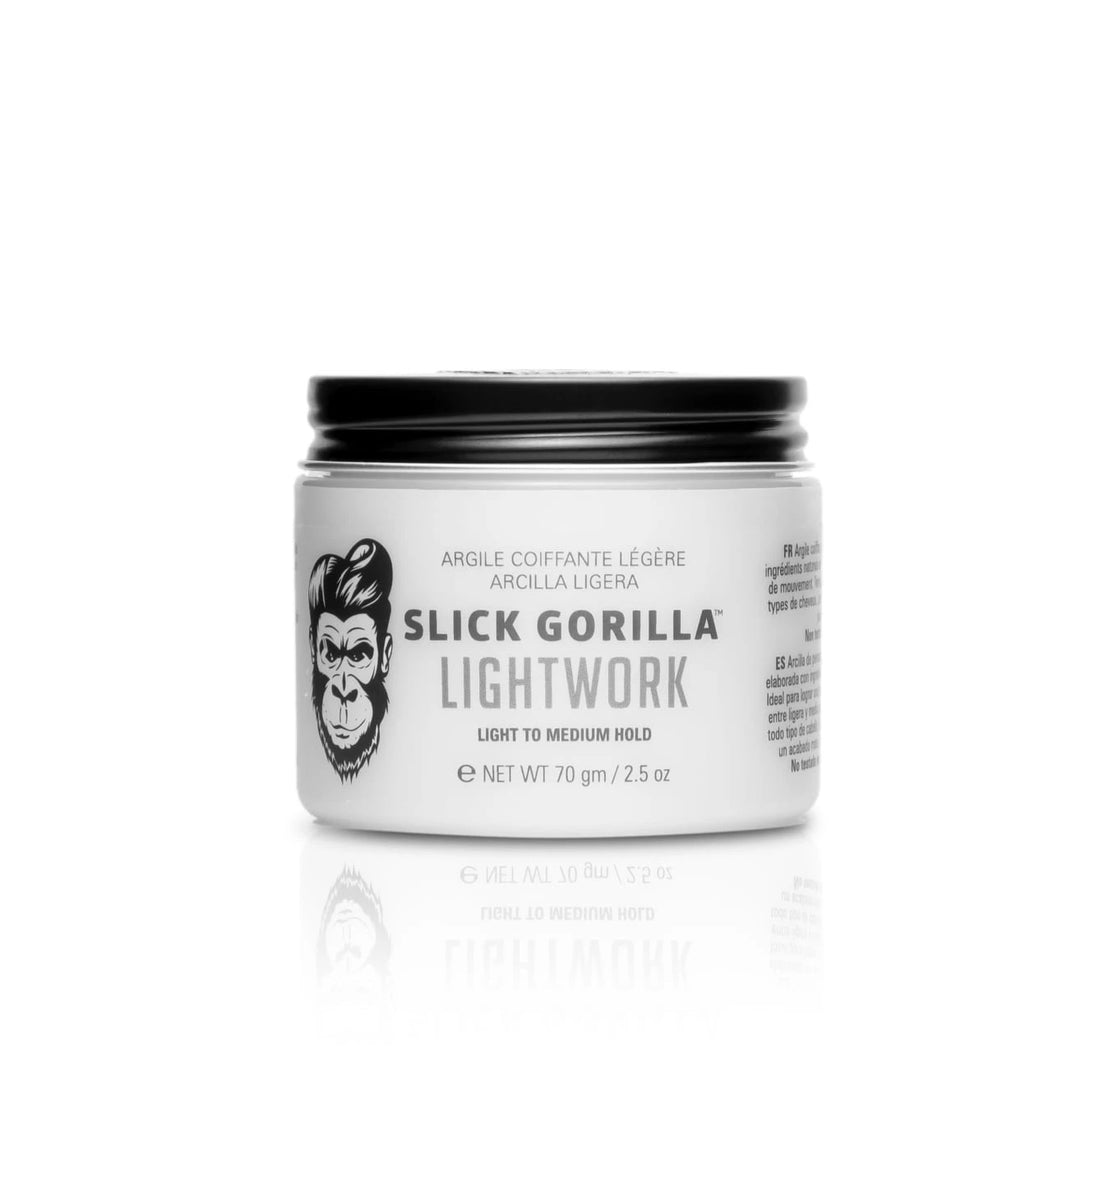 Slick Gorilla Hair Styling Powder 20g - 2 Pack